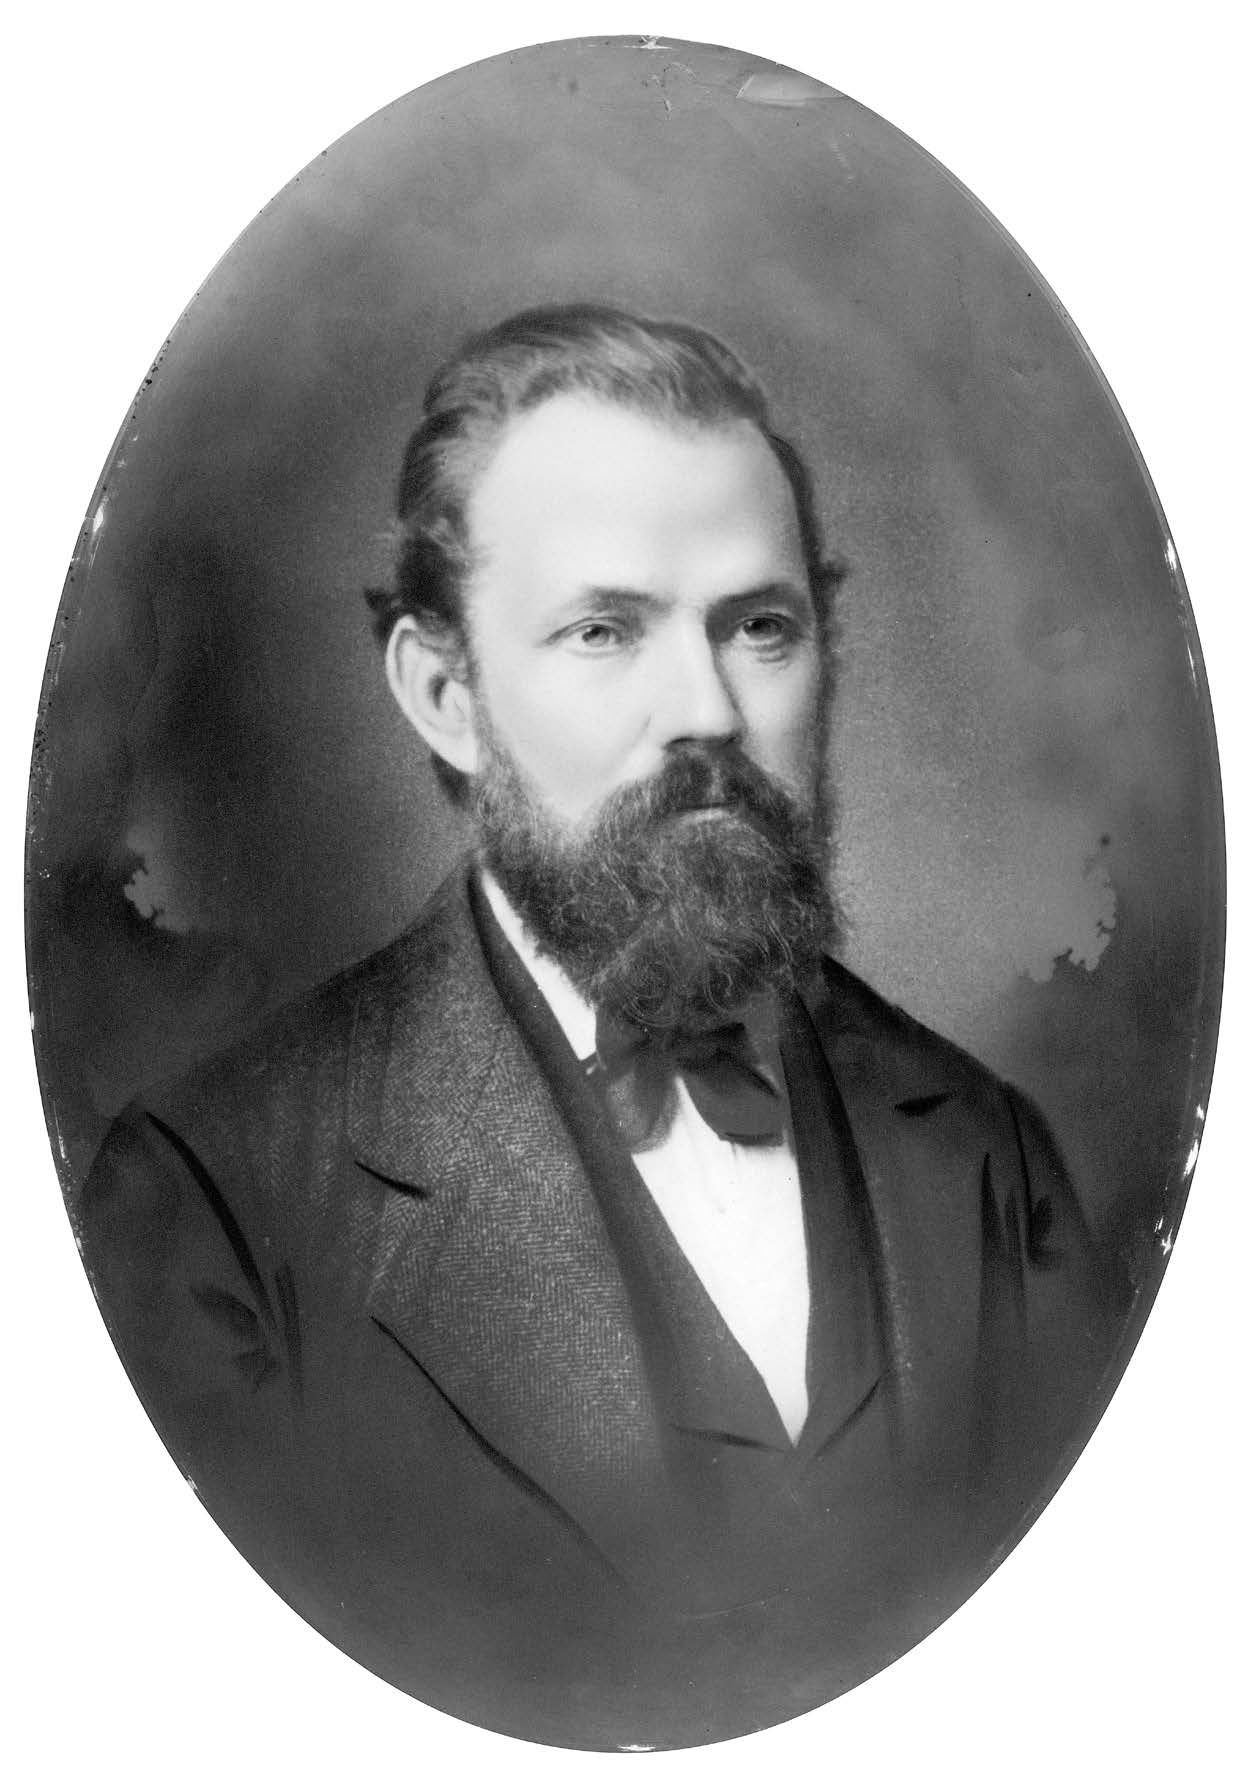 Portrait of Hans Jørgensen, ca. 1882, reproduced by permission of Mary Lambert, Salt Lake City, Utah.